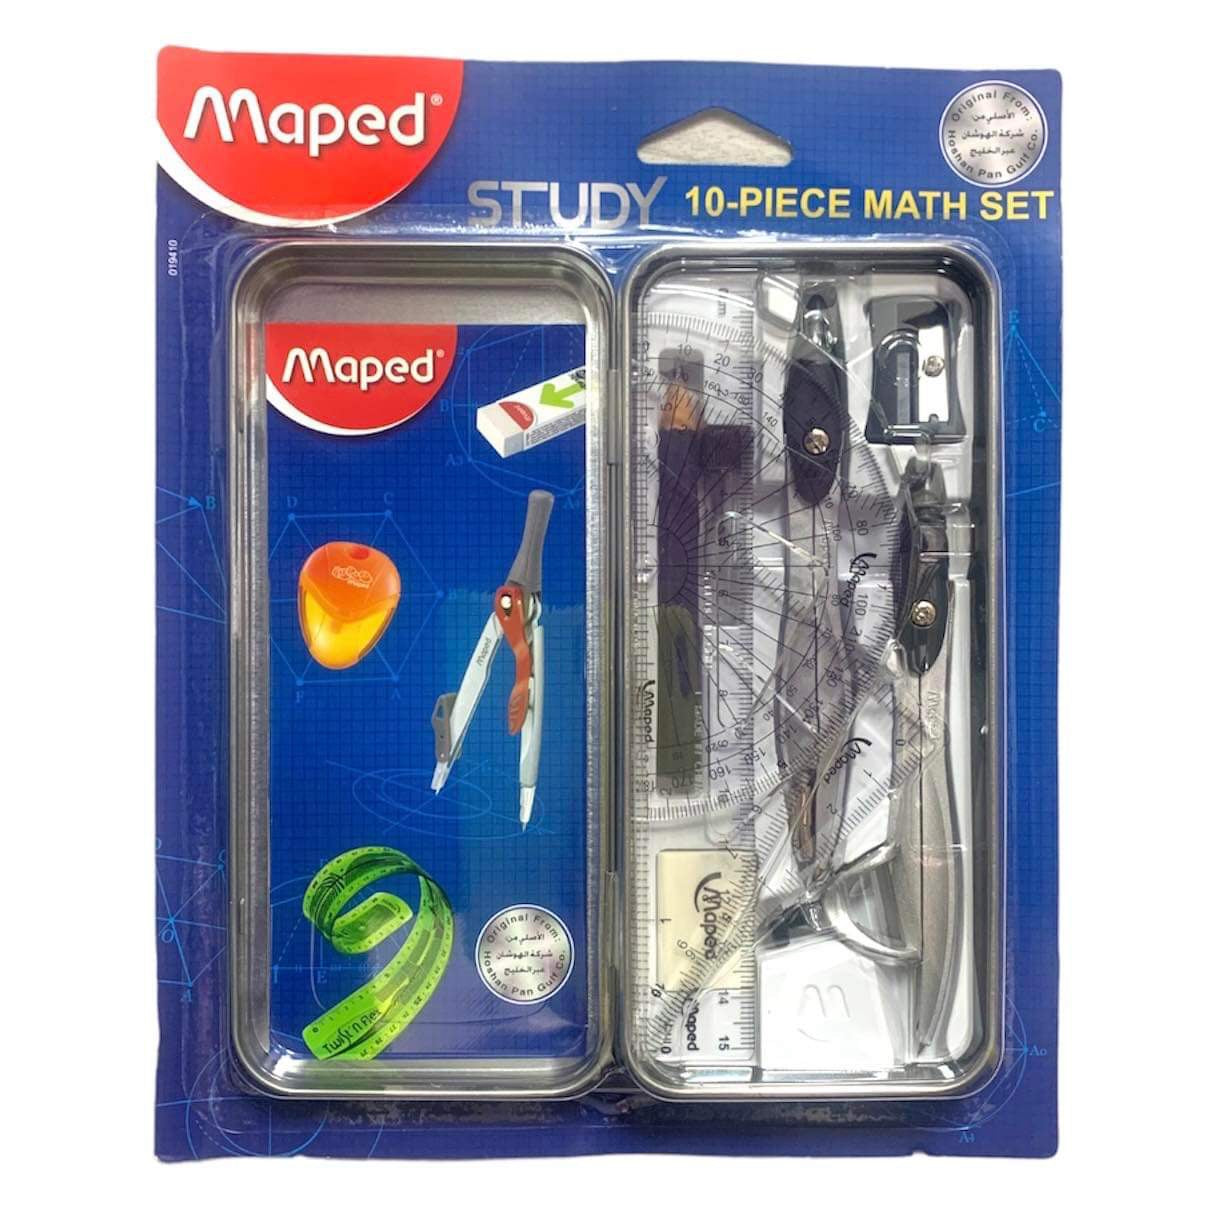 Maped 10 Piece Math Set || علبة هندسة ١٠ قطعة مابد 